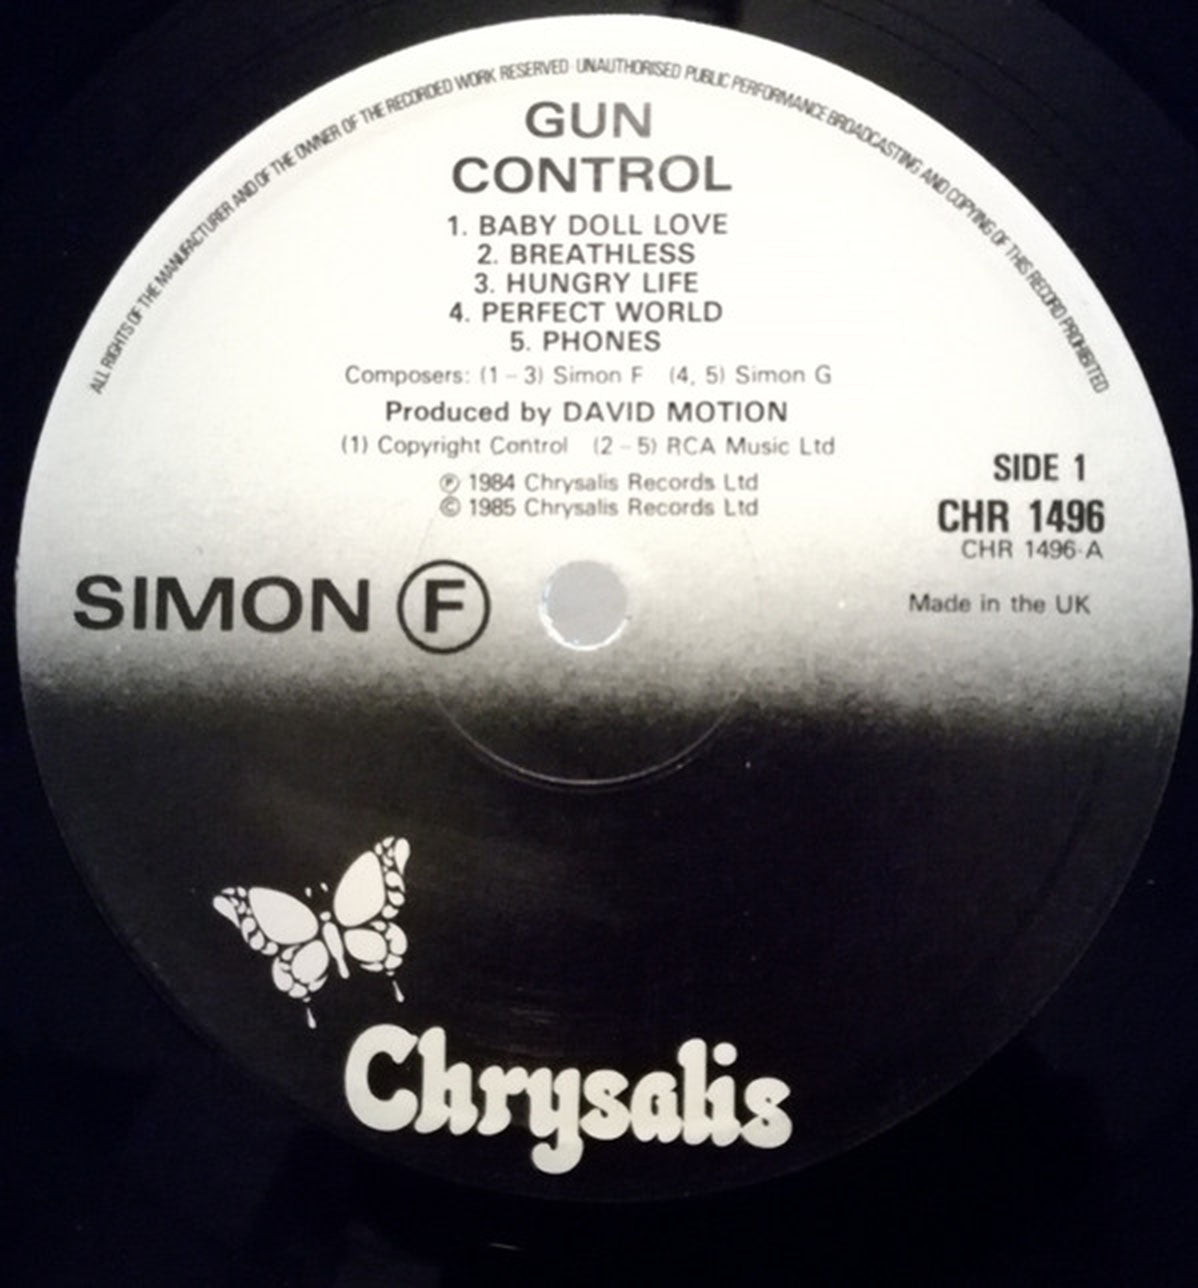 Simon F – Gun Control - UK Pressing